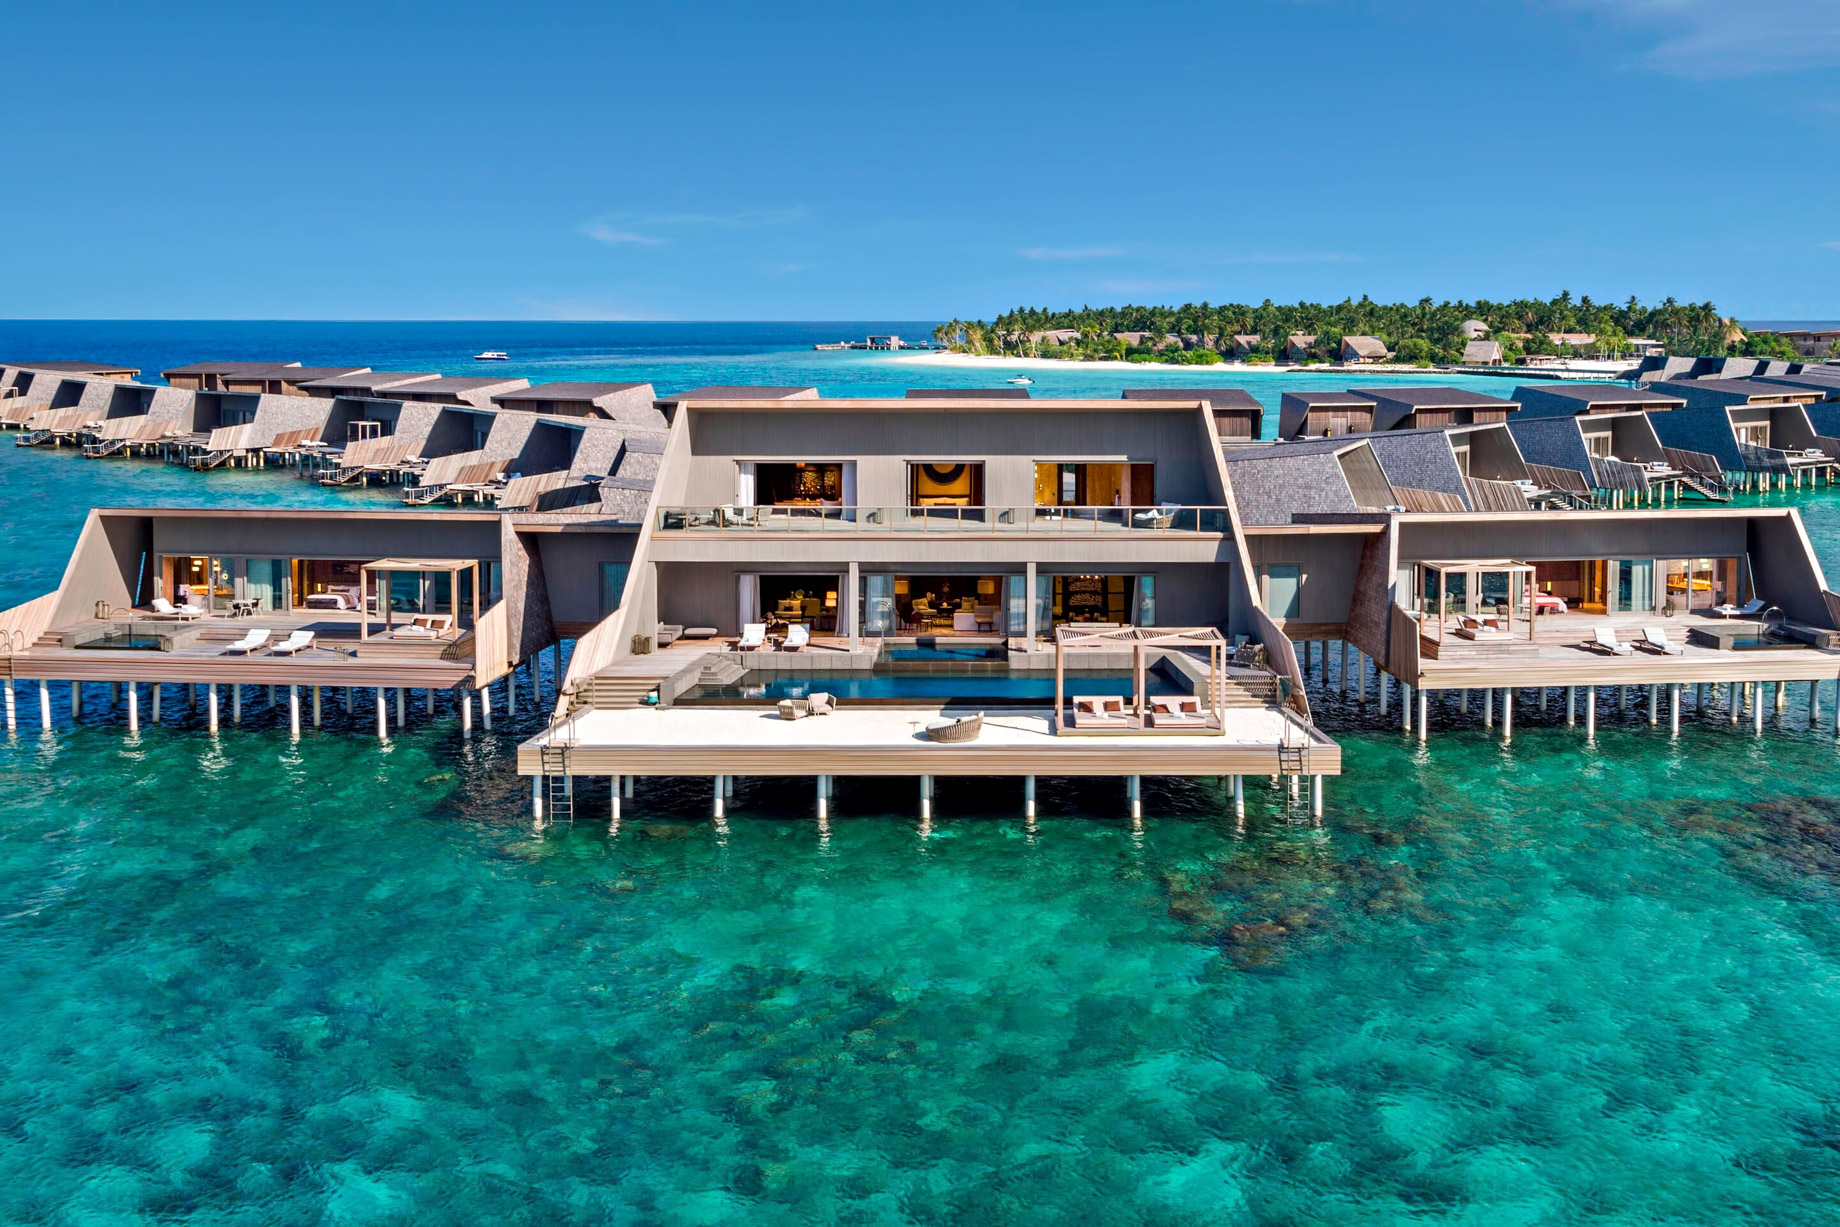 The St. Regis Maldives Vommuli Resort – Dhaalu Atoll, Maldives – John Jacob Astor Estate